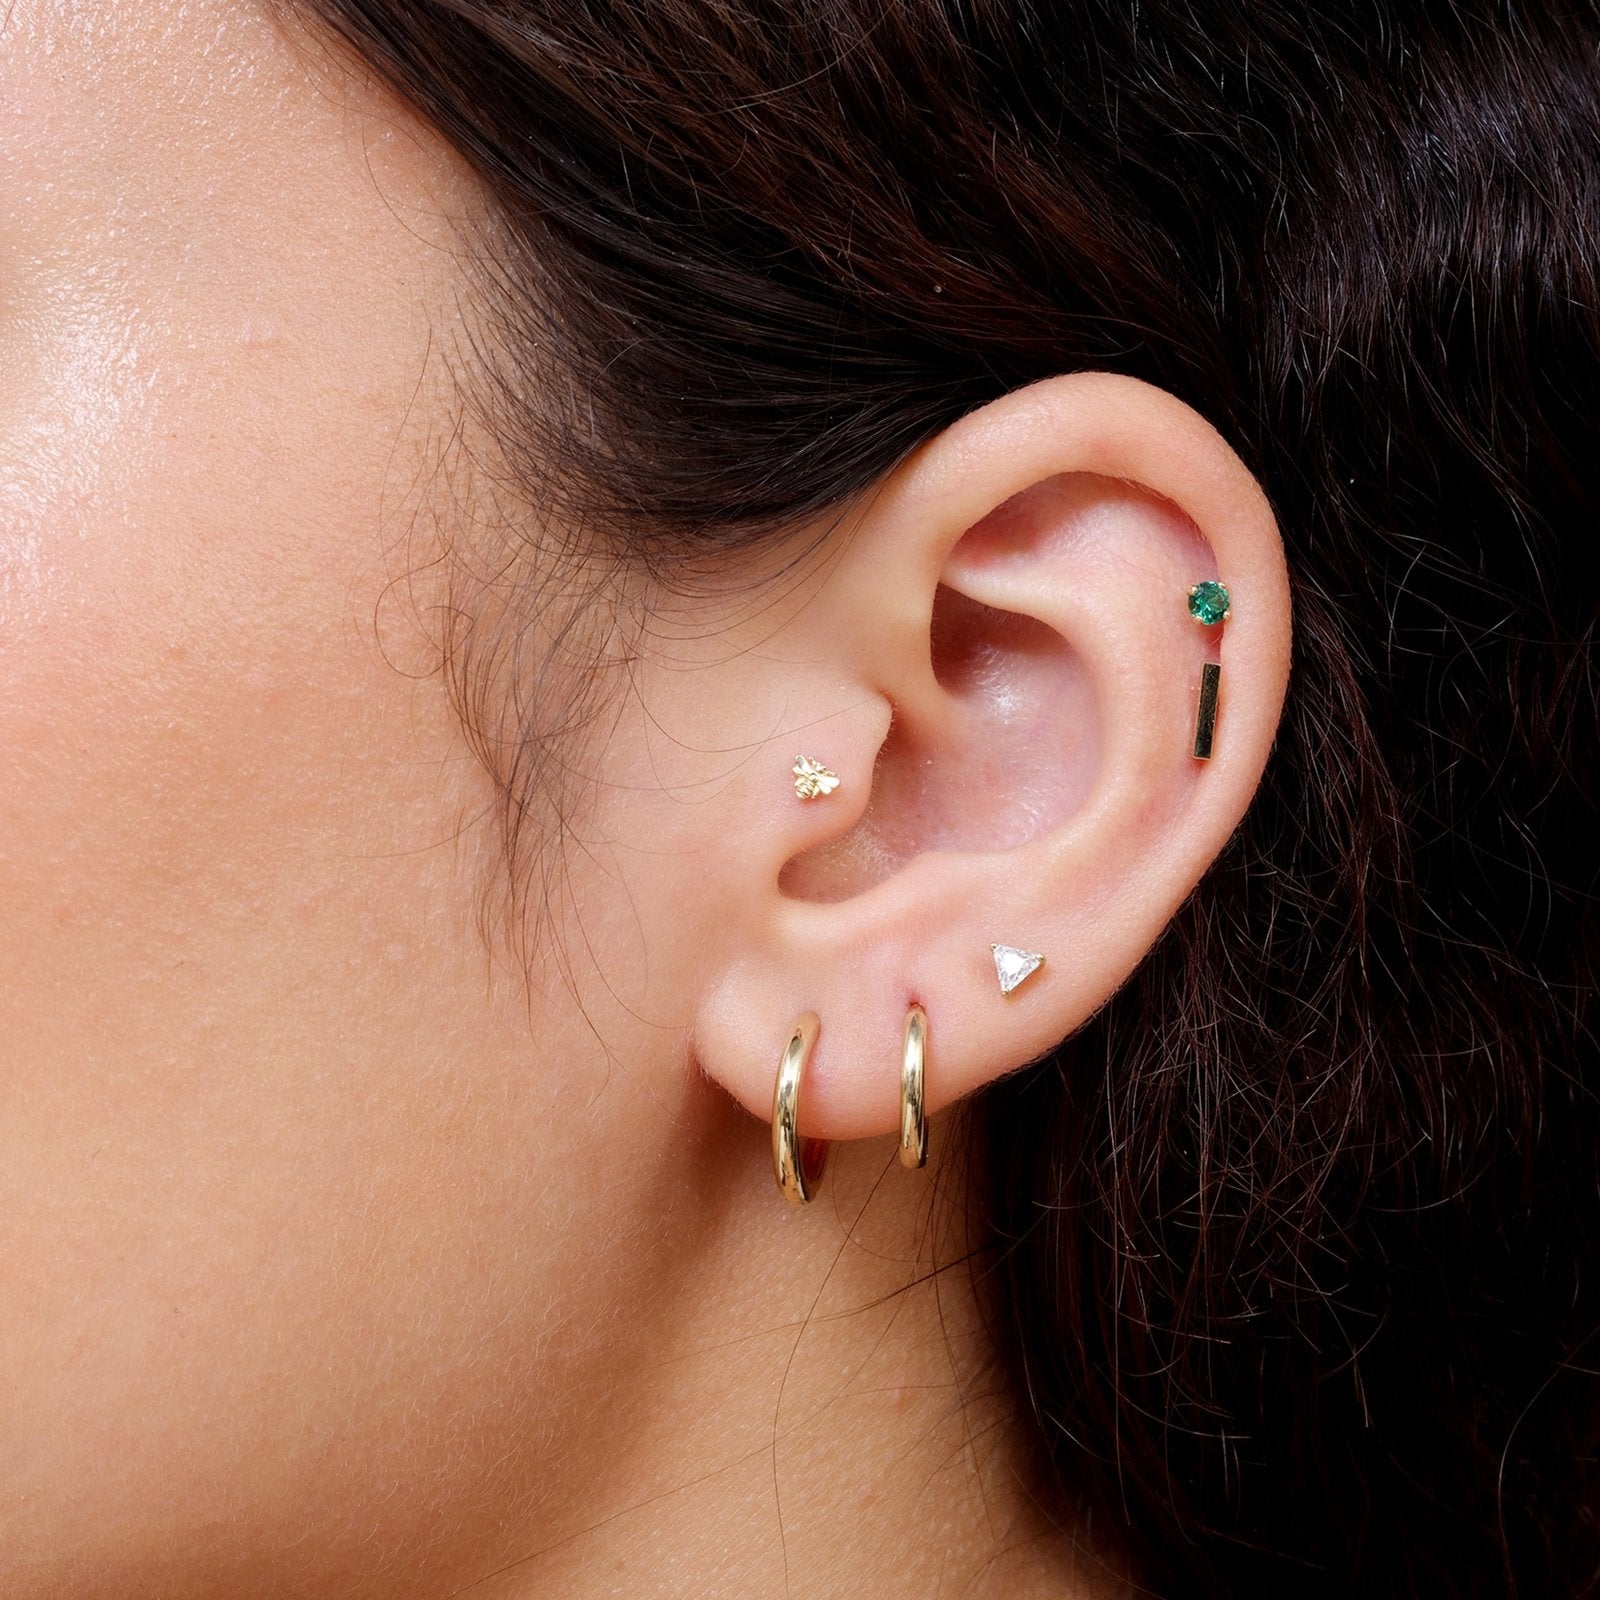 Gold Bar Flat Back Stud Earring Earrings Estella Collection #product_description# 18131 14k Cartilage Earring Cartilage Earrings #tag4# #tag5# #tag6# #tag7# #tag8# #tag9# #tag10# 5MM